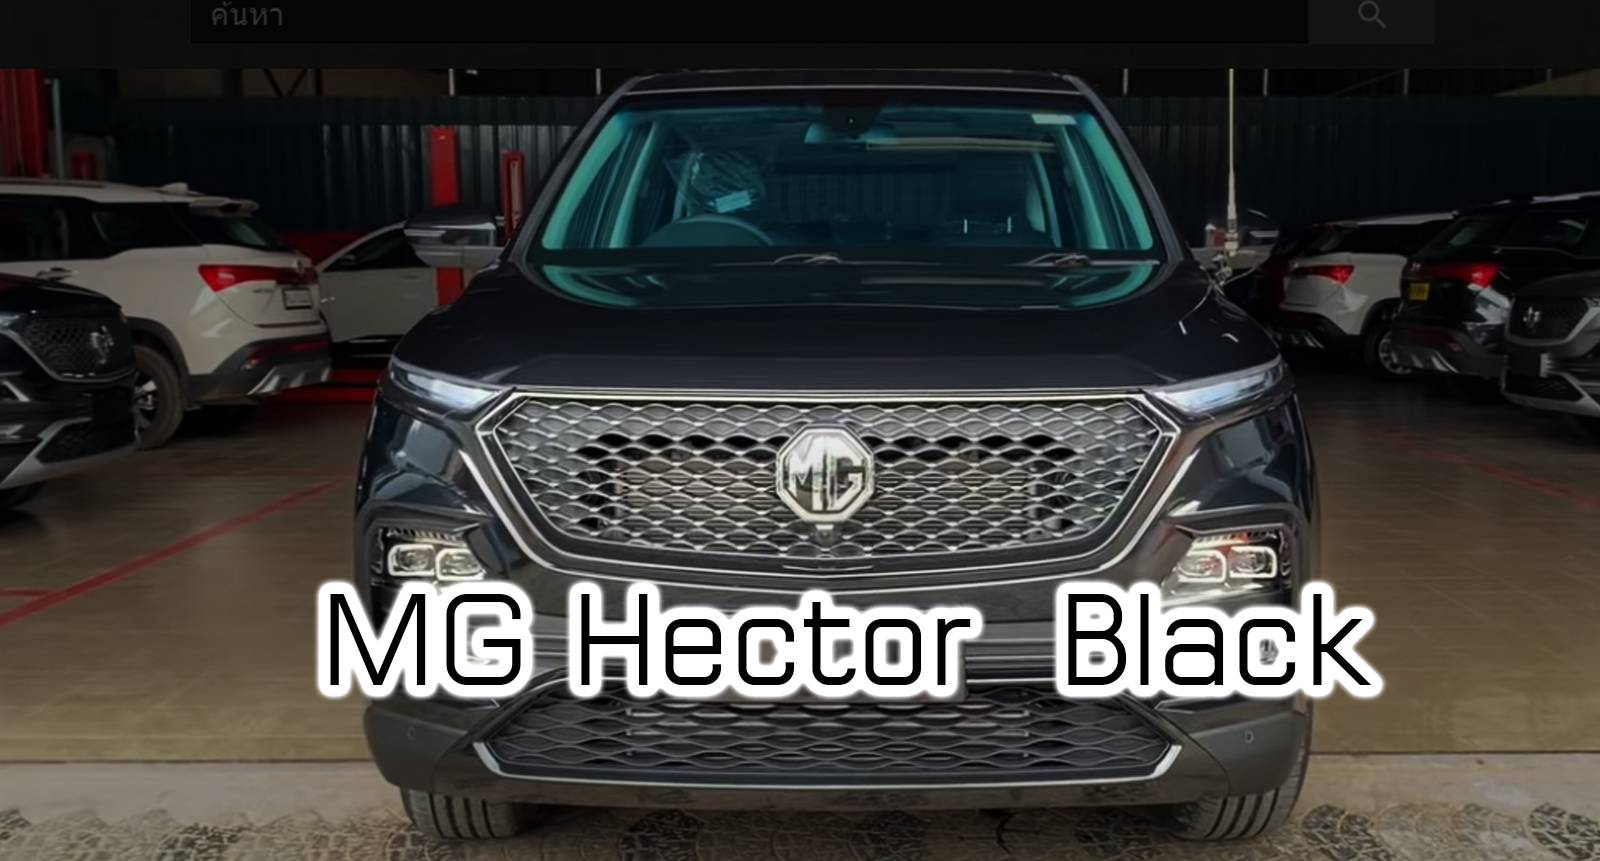 MG Hector แต่งดำสปอร์ตหรู All-black Theme